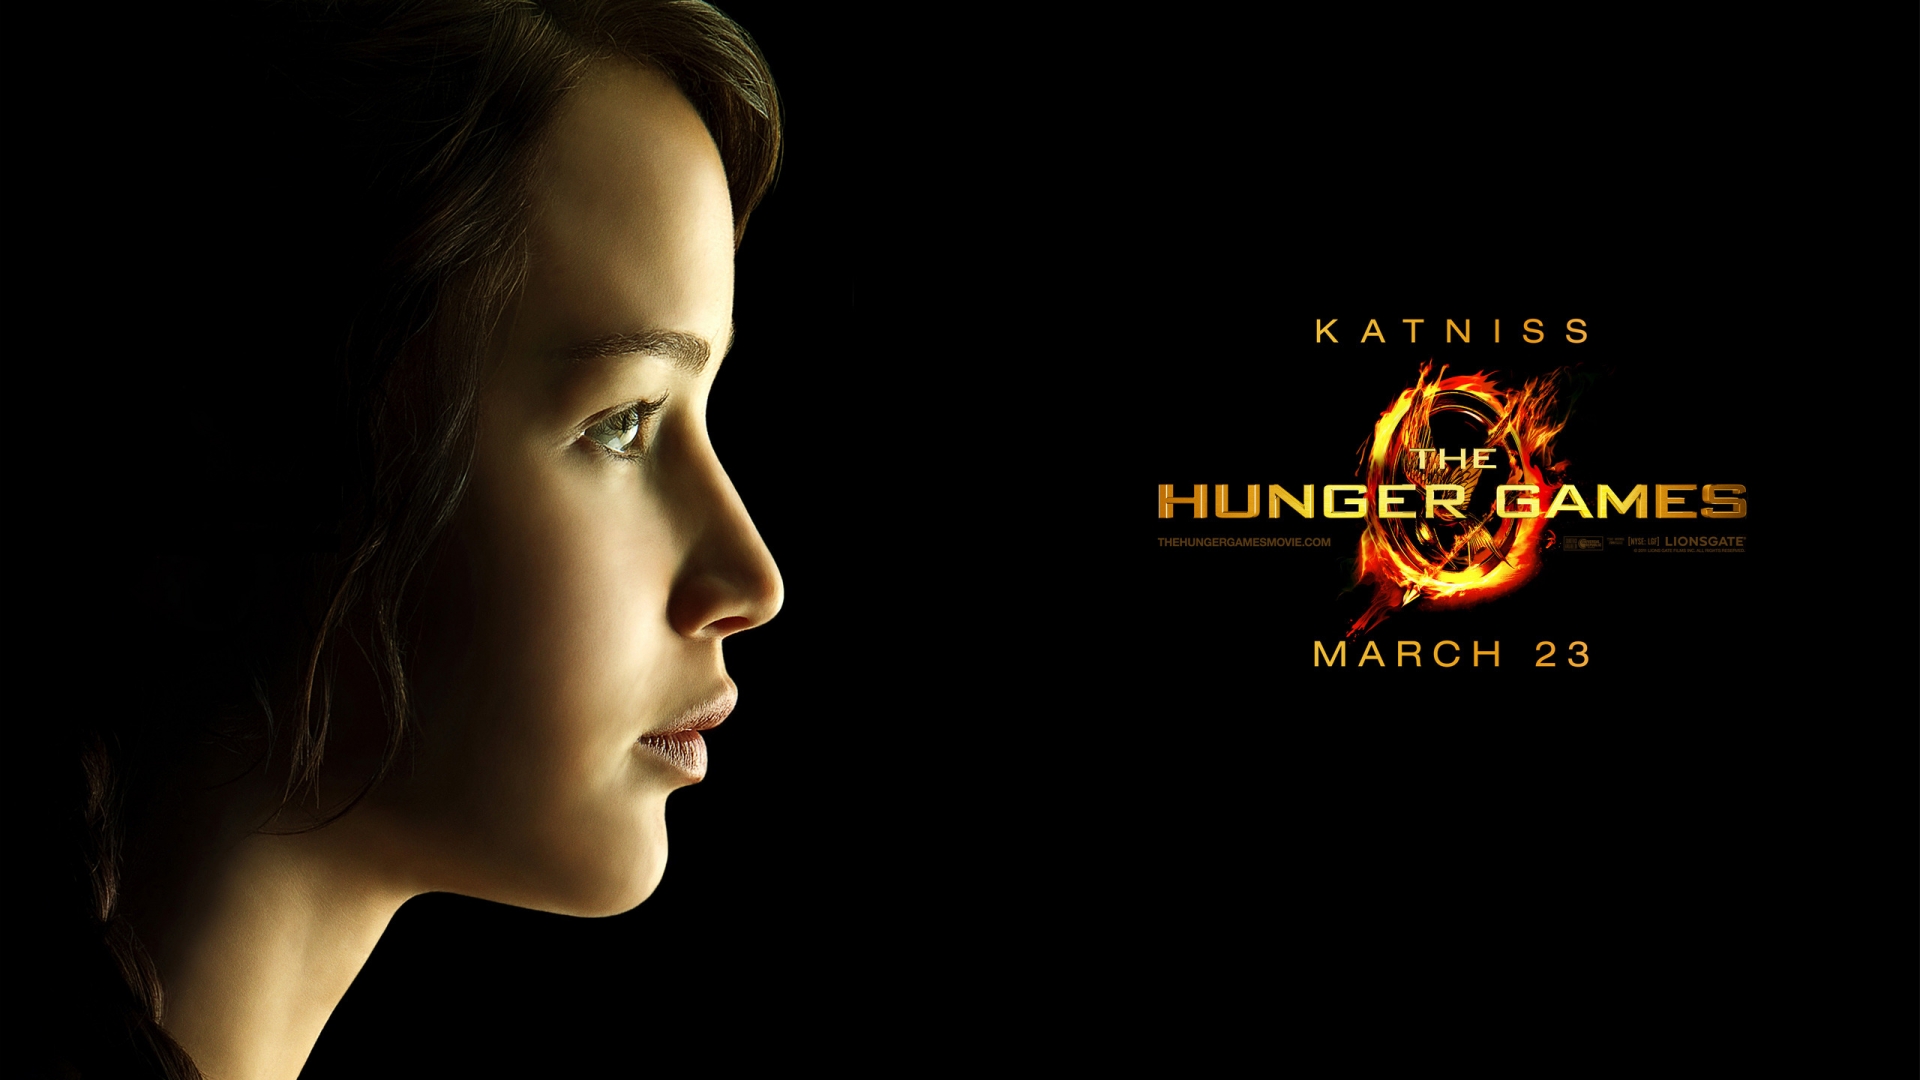 The Hunger Games Katniss for 1920 x 1080 HDTV 1080p resolution